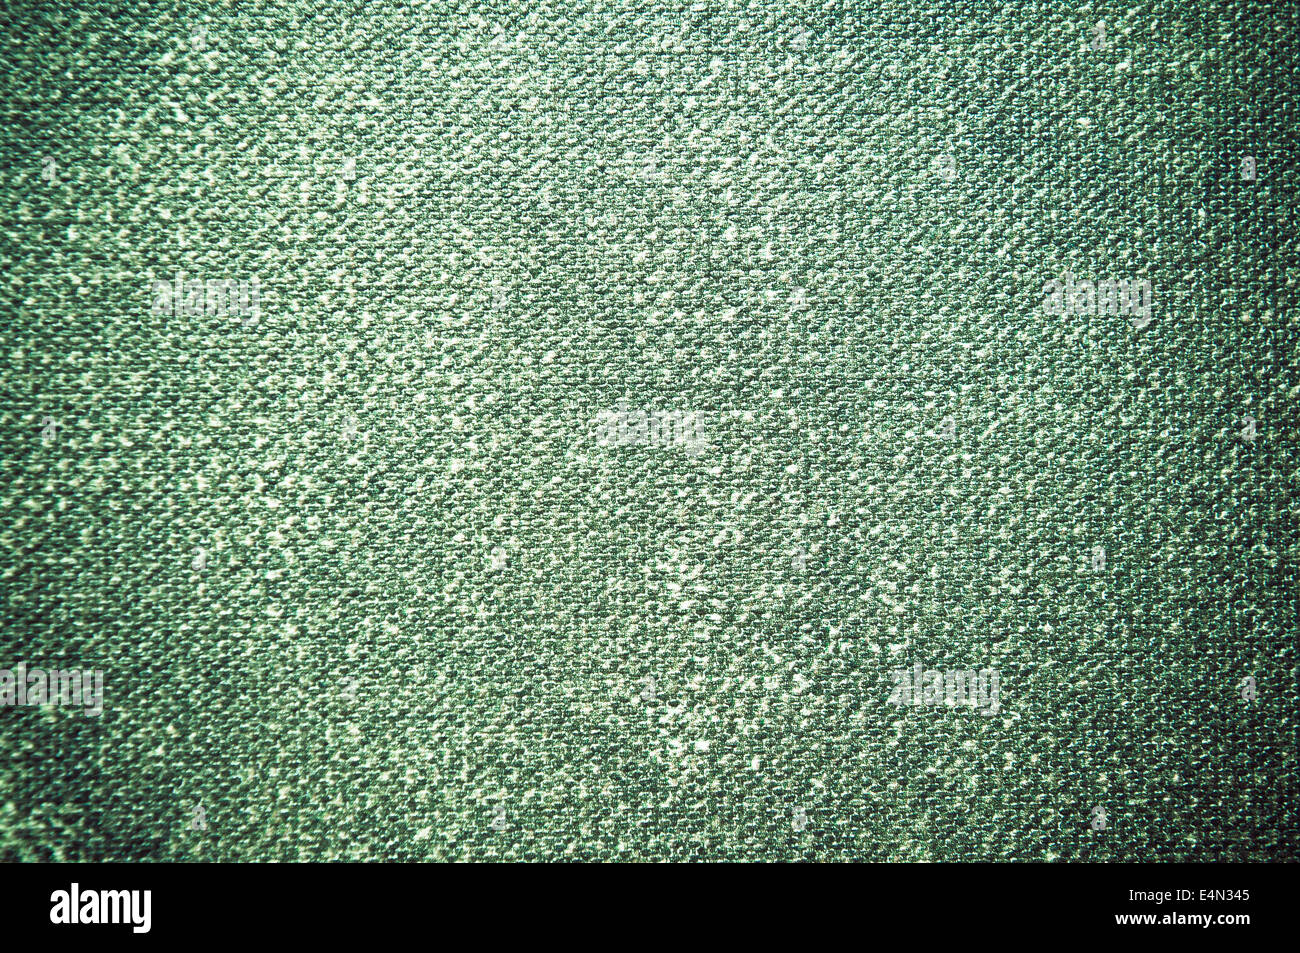 Canvas of green rhinestones. Background Stock Photo - Alamy